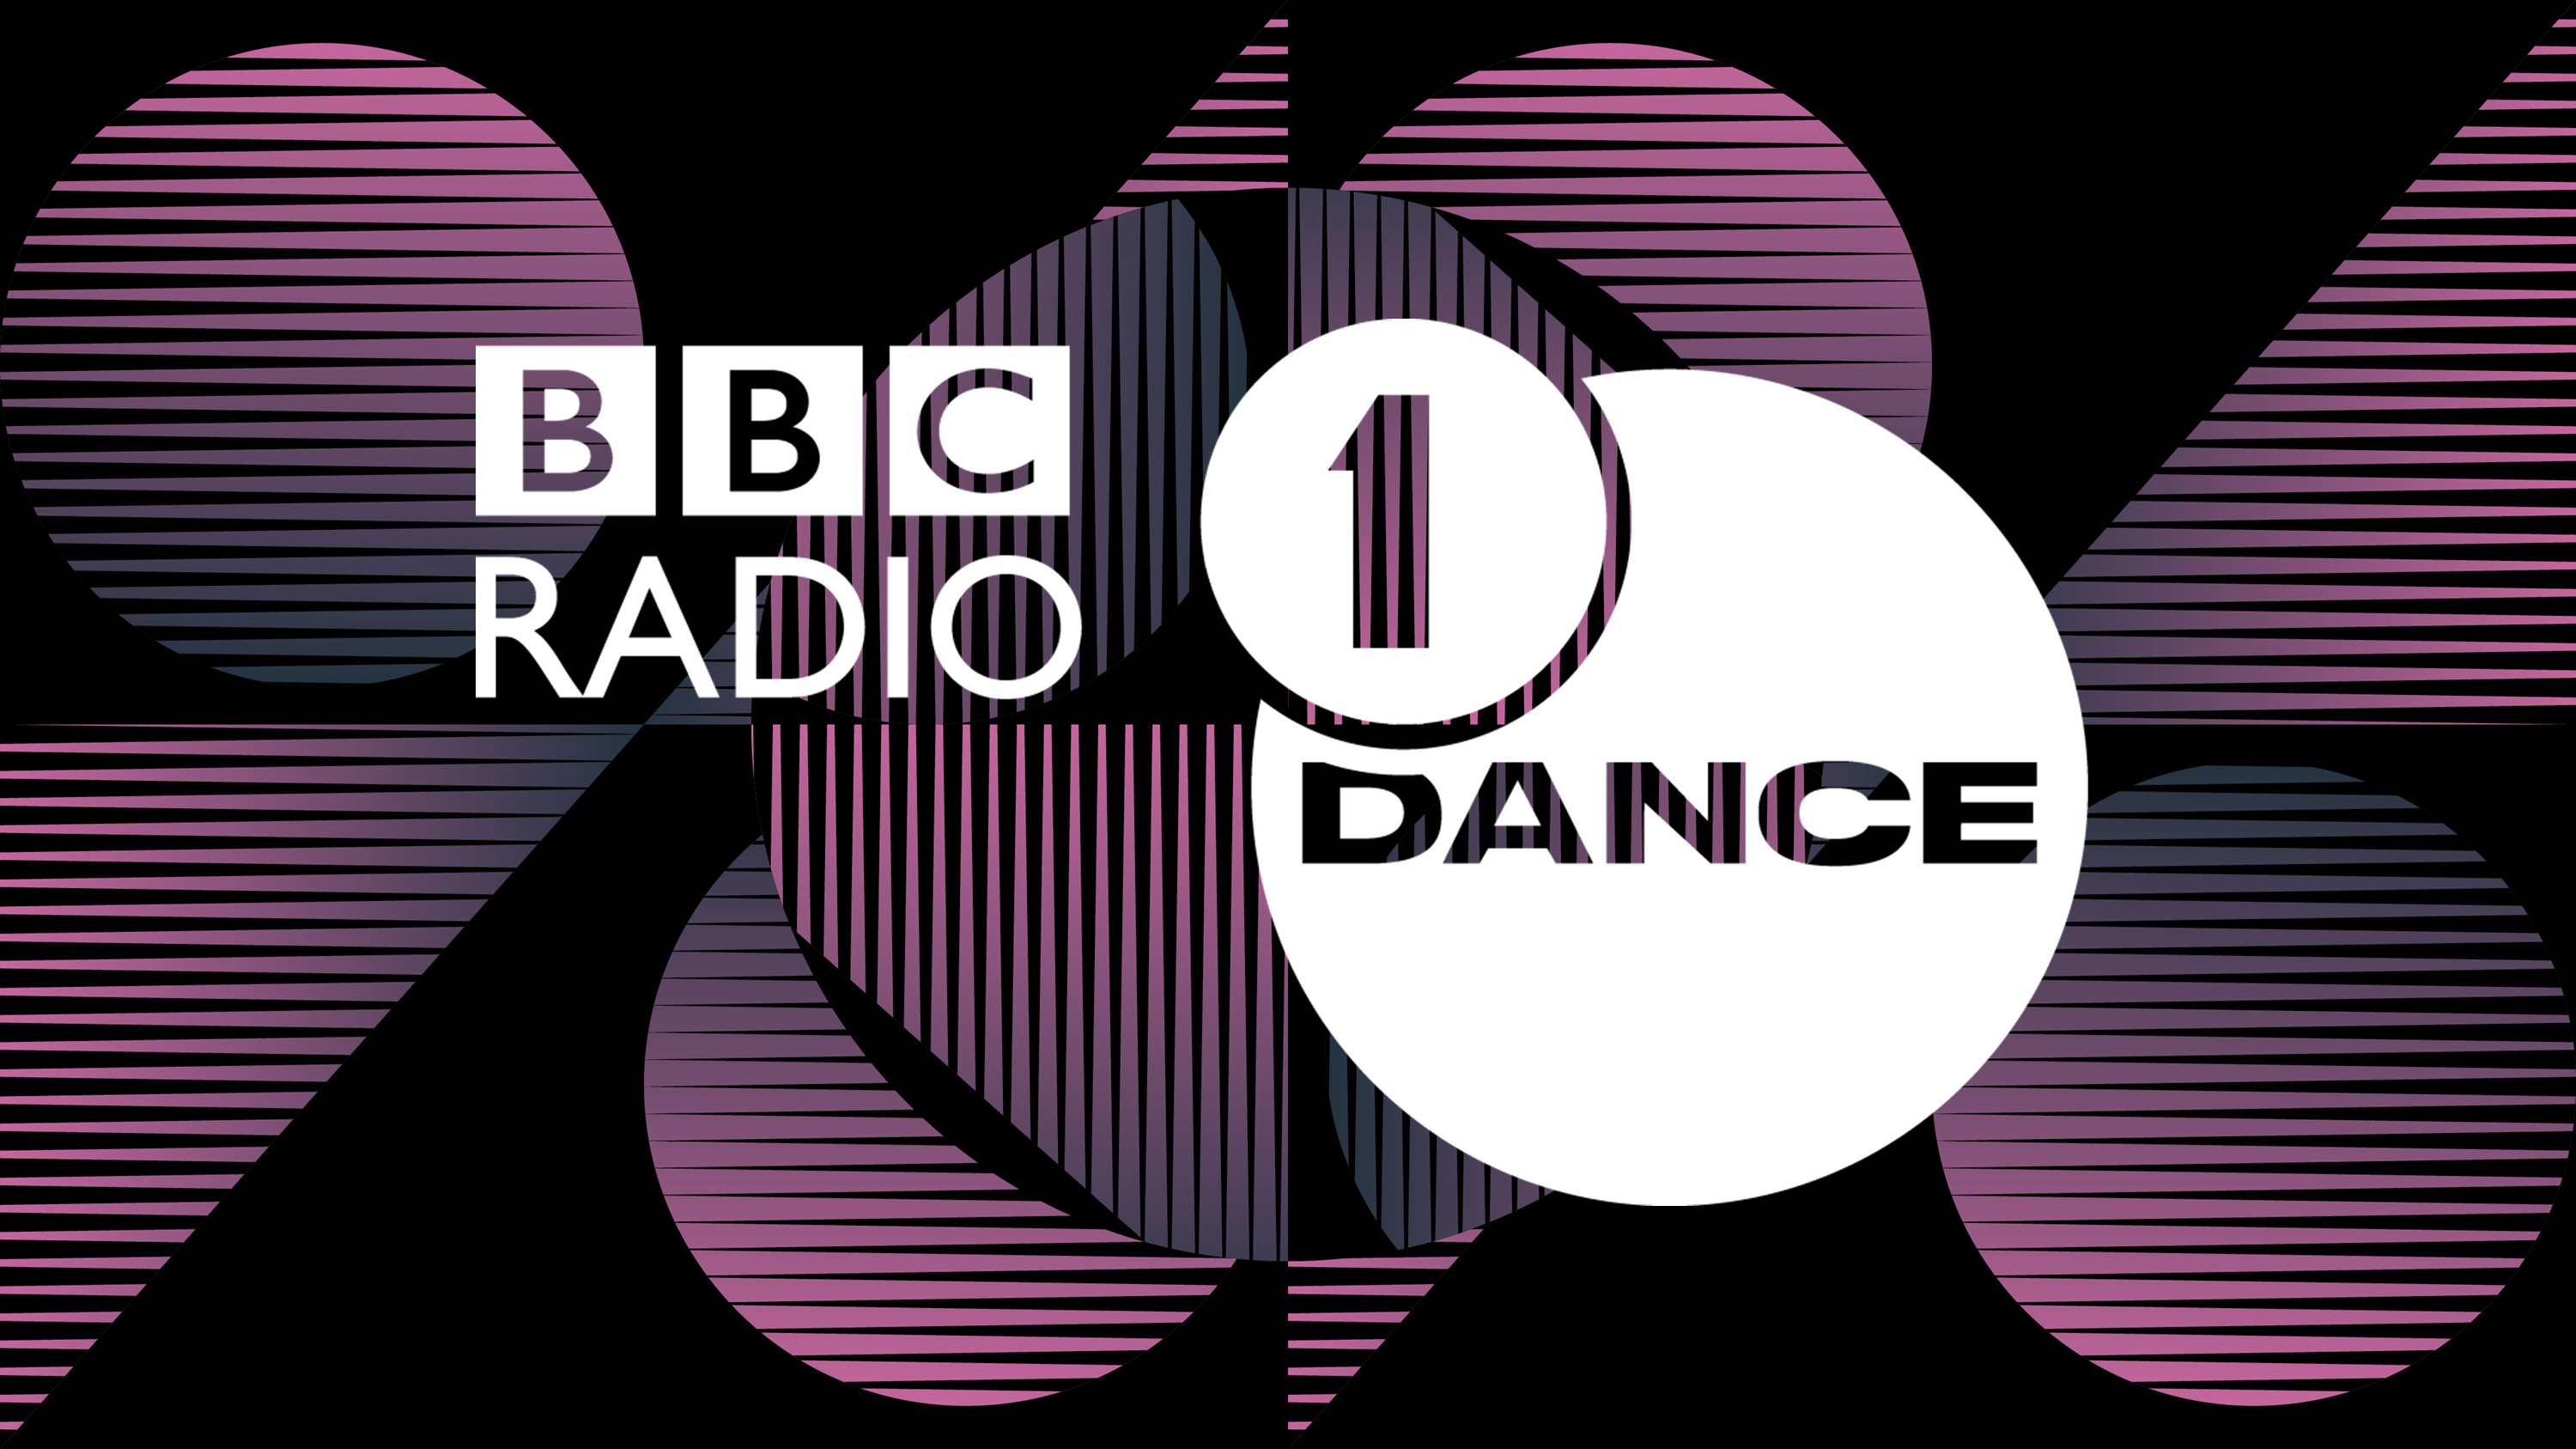 Launch date and set Radio 1 Dance RadioToday